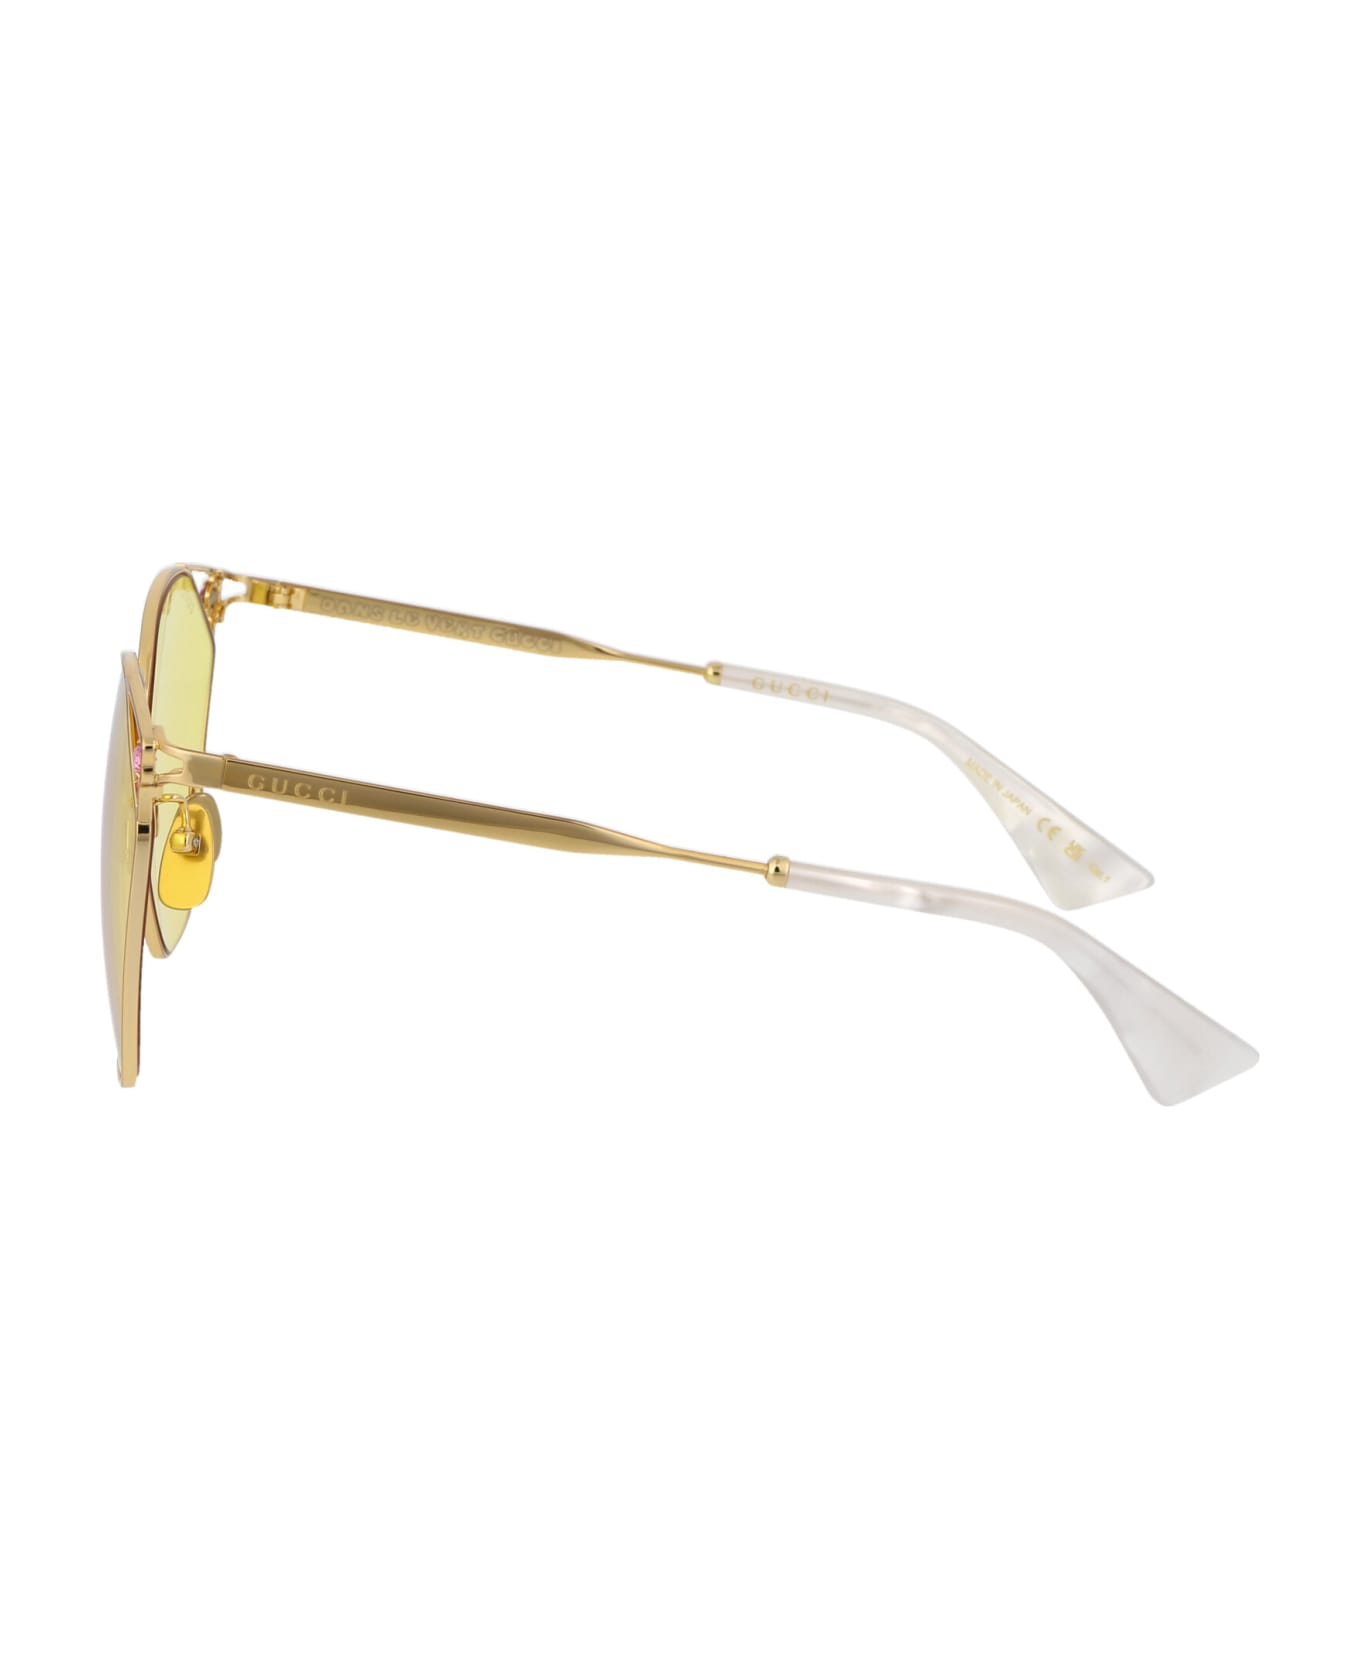 Gucci Eyewear Gg1375sa Sunglasses - 002 GOLD GOLD YELLOW サングラス